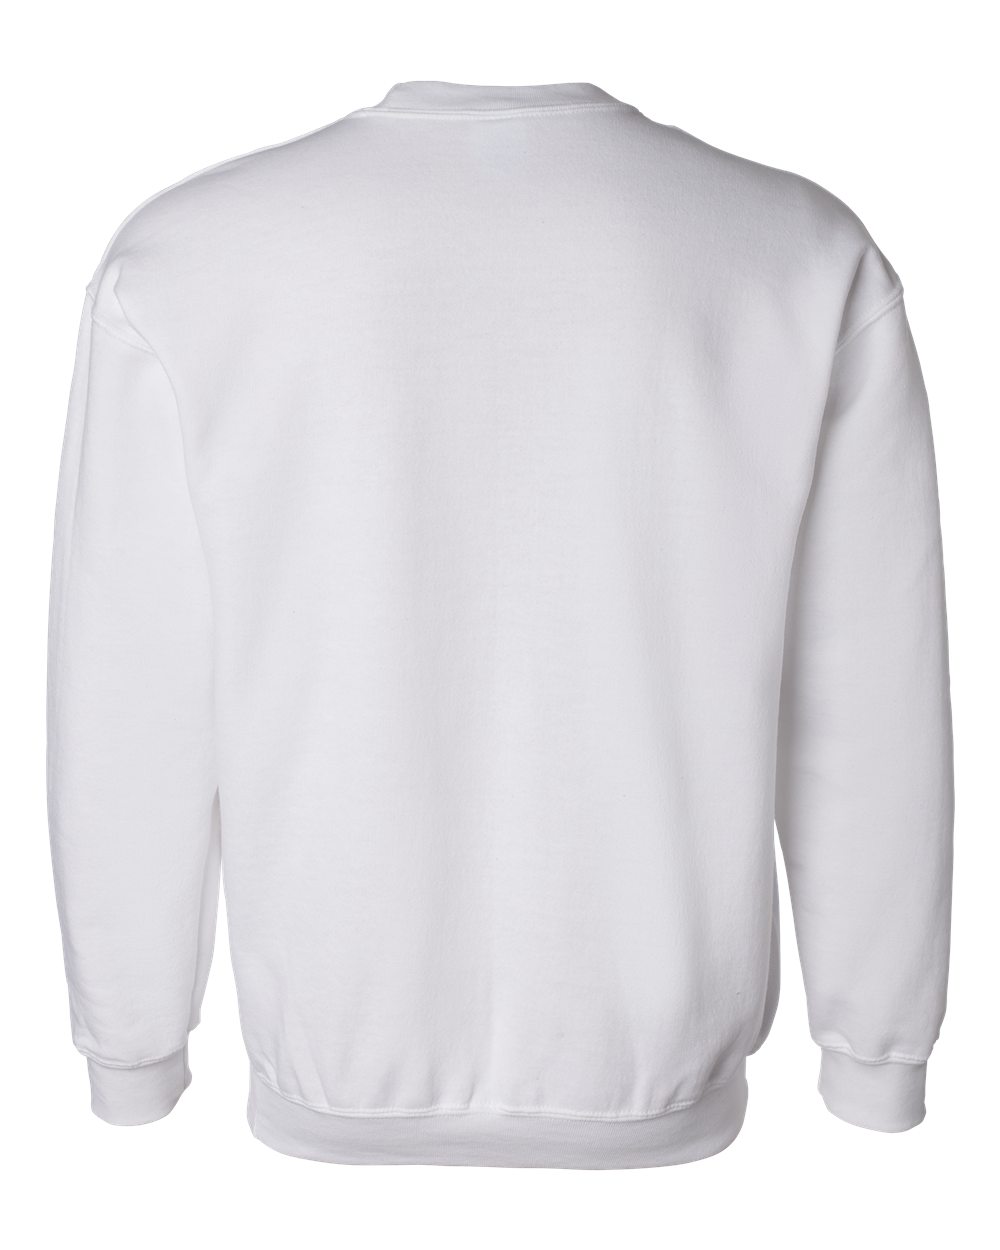 Download Gildan Mens DryBlend Crewneck Sweatshirt Blank 12000 up to 3XL | eBay